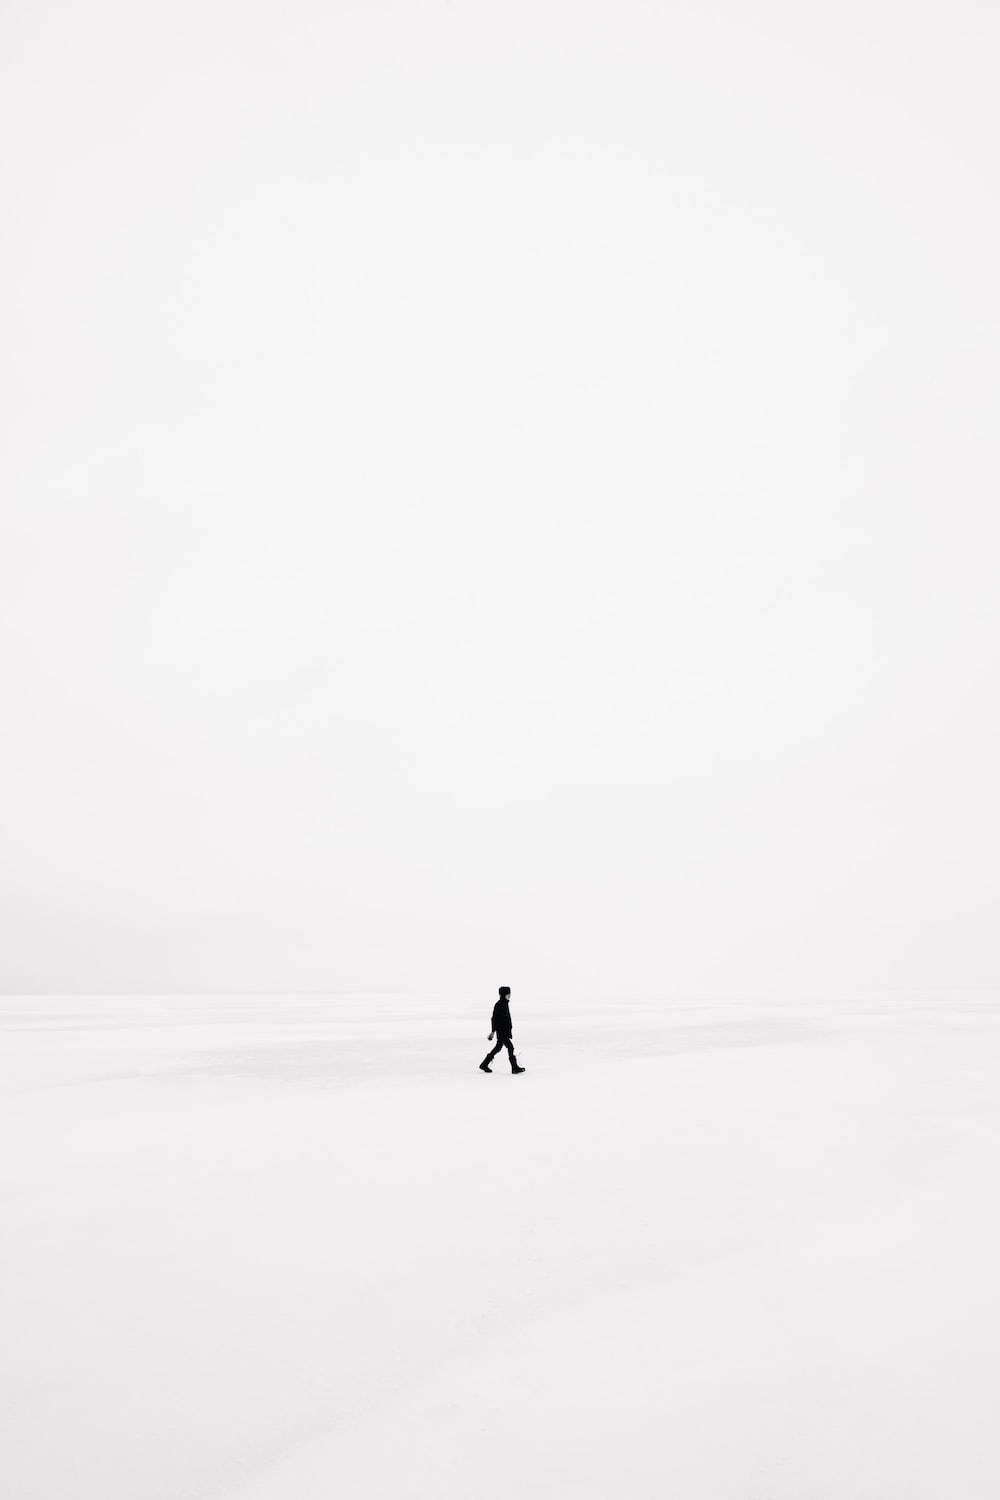 Simple Hd Walking Man Background